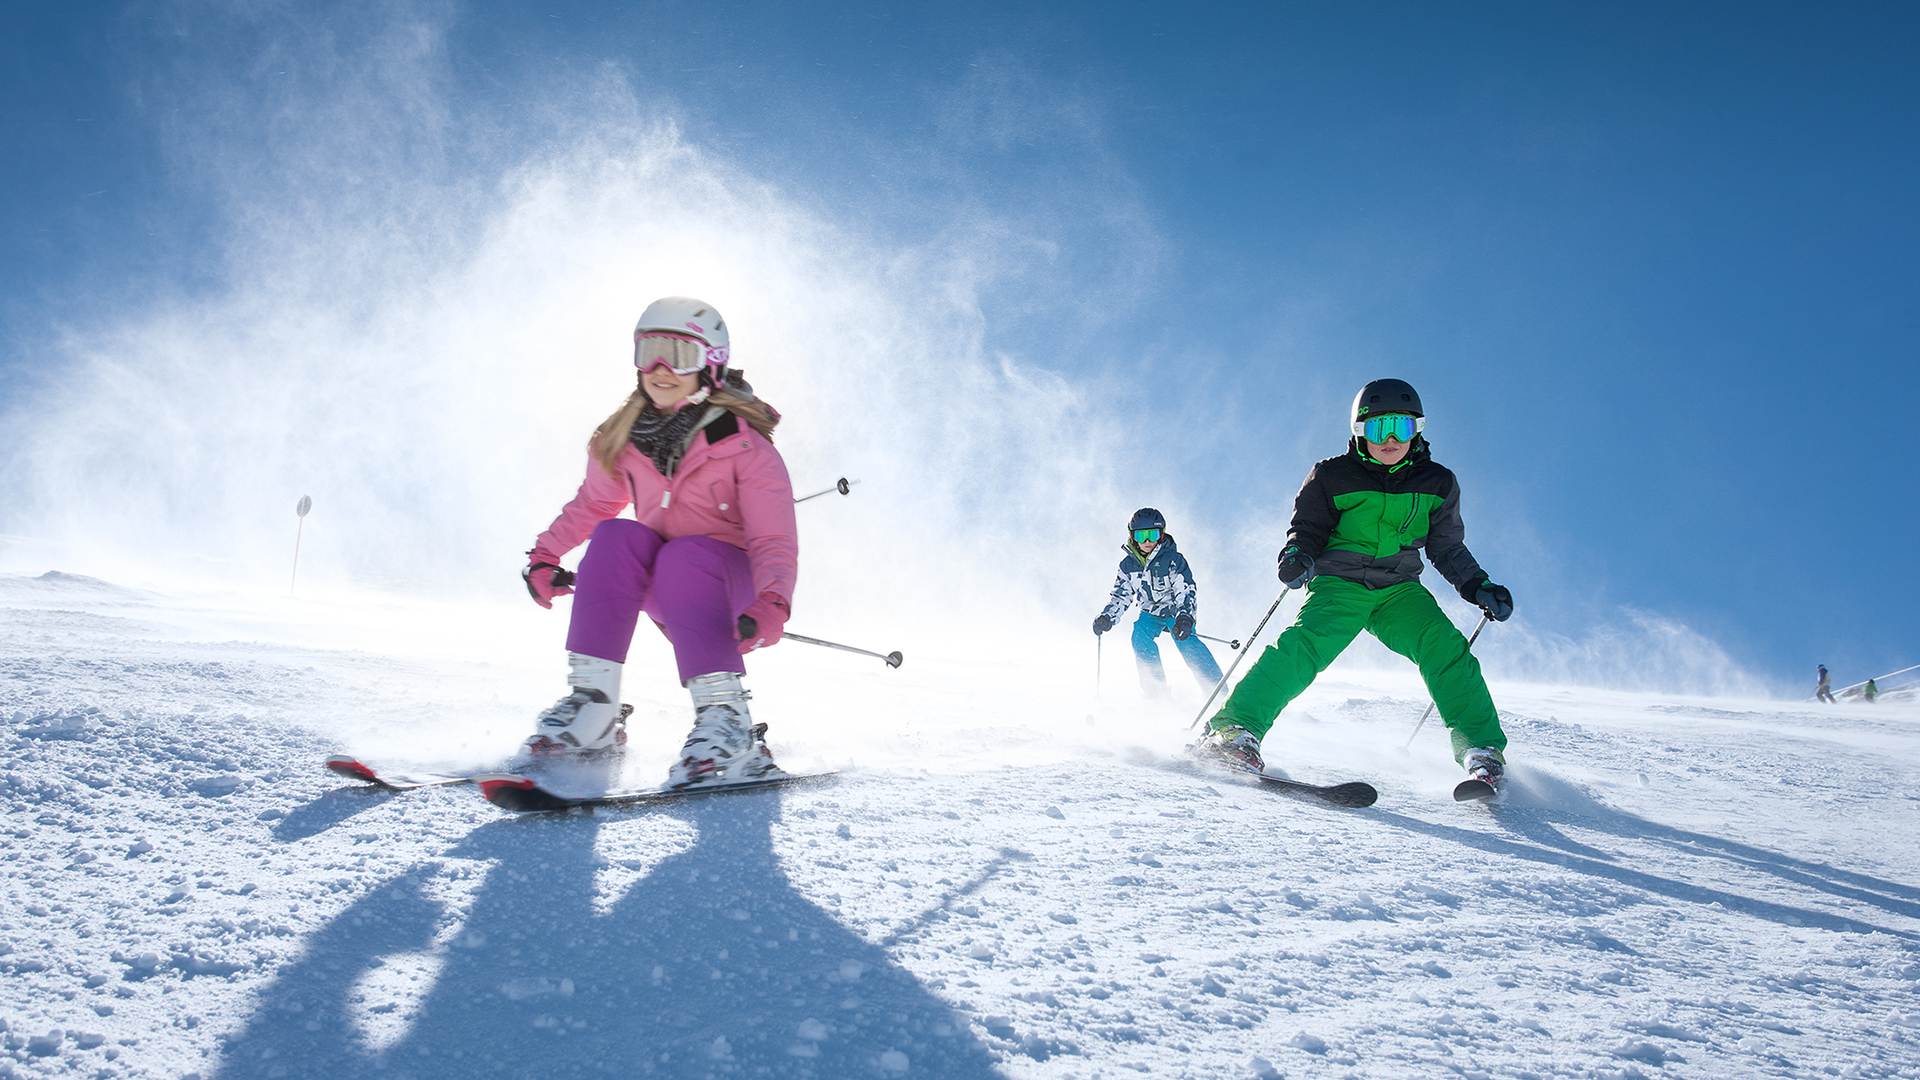 See ski. Skiing Holidays для детей. Ski Family Club. Королевская семья на горнолыжном курорте. Zell am see Winter Sport.